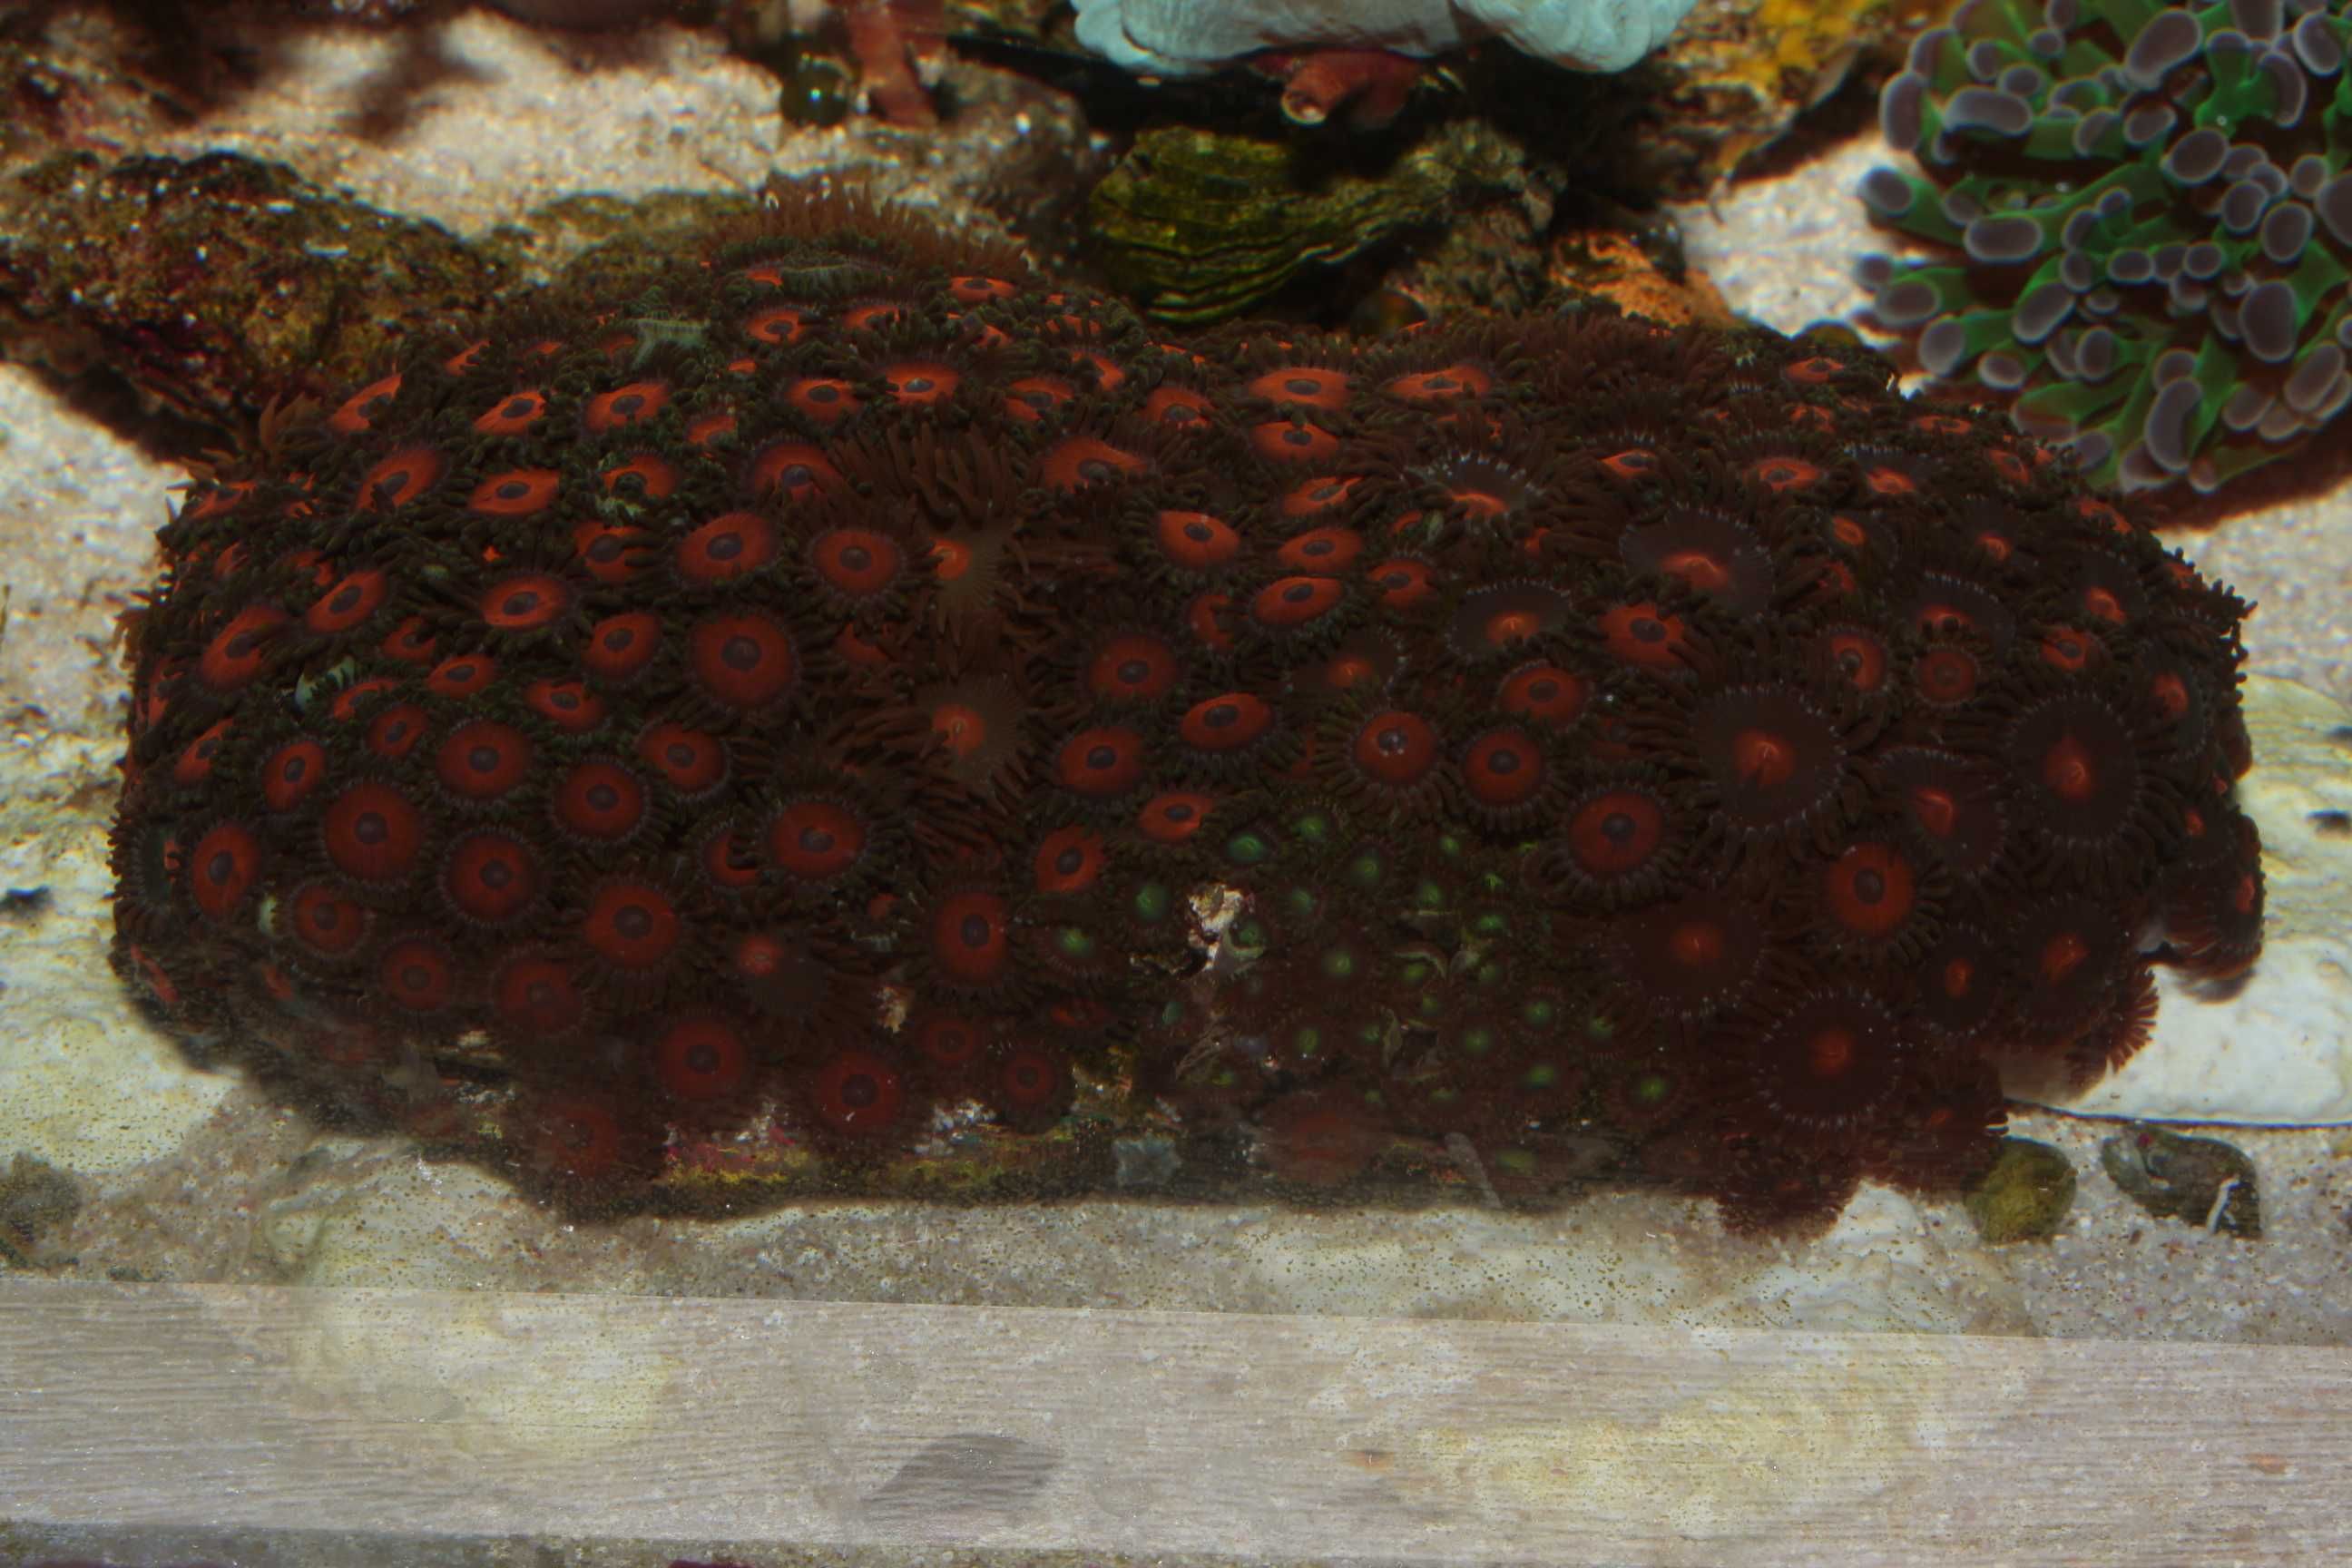 Zoanthus wild rock.  Koralowce, Morskie